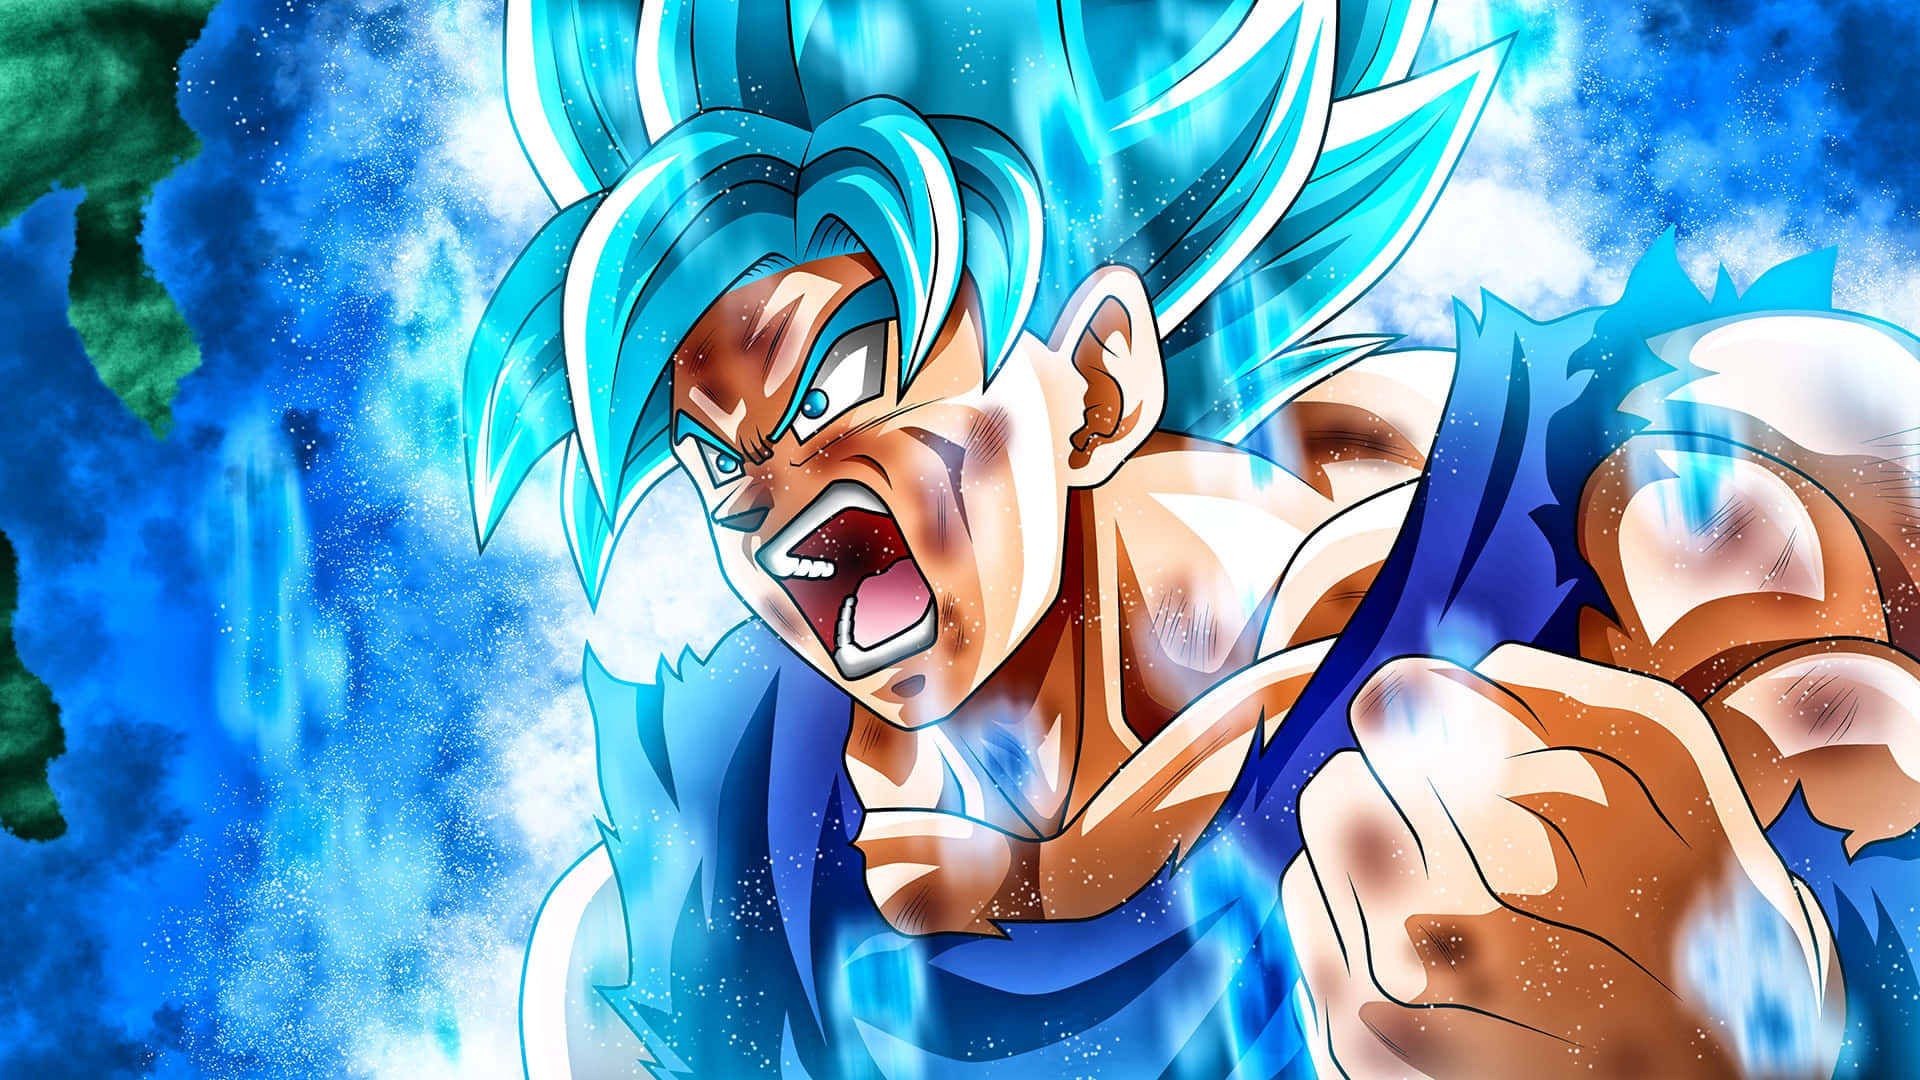 Imagende Raging Blue Goku